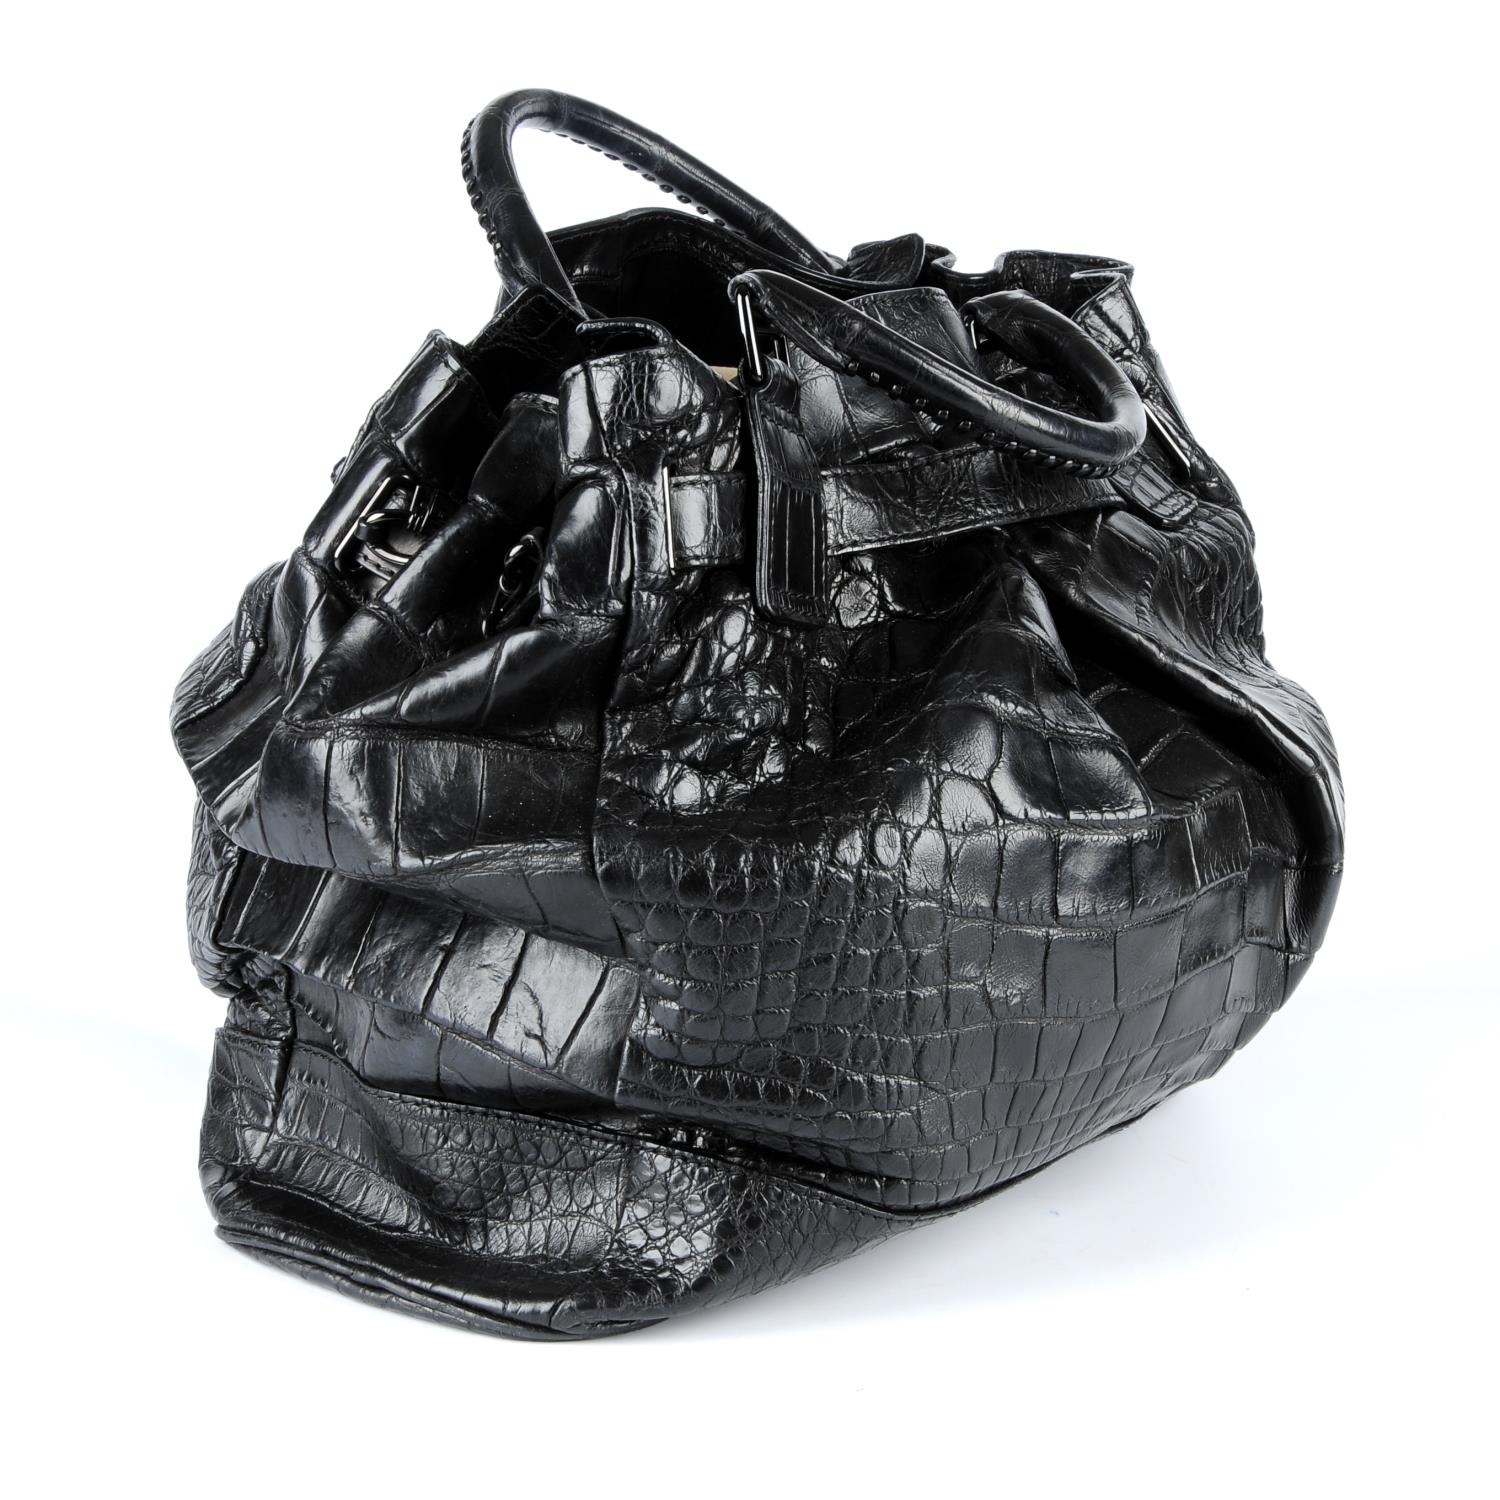 BURBERRY - a black Alligator Nicholson handbag. - Image 3 of 4